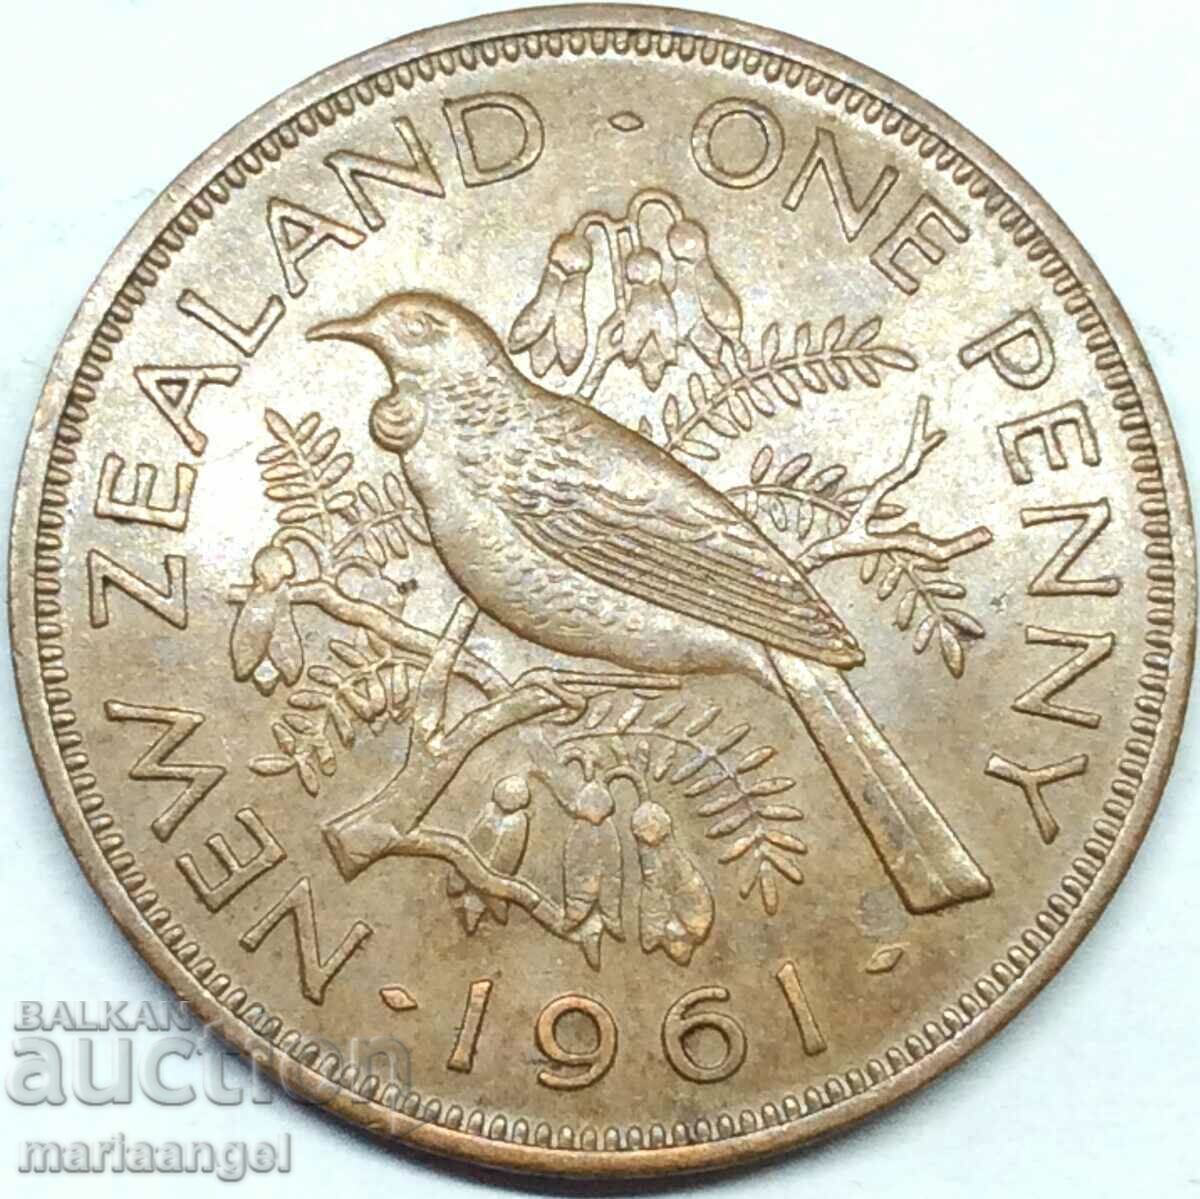 New Zealand 1 Penny 1961 Elizabeth II 30mm Bronze